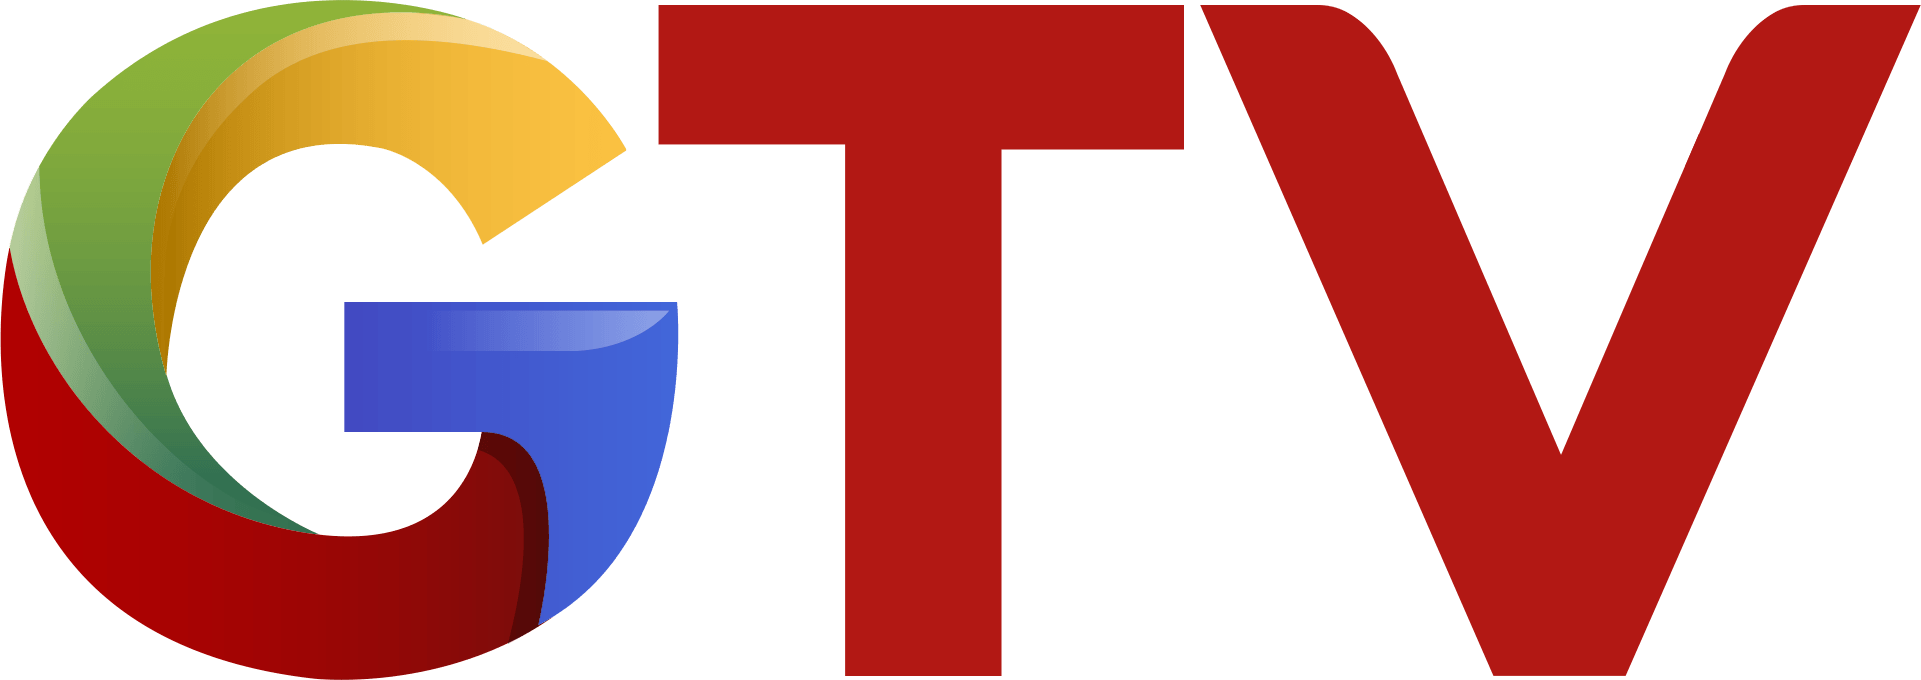 GTV Logo - File:GTV logo (2017).png - Wikimedia Commons